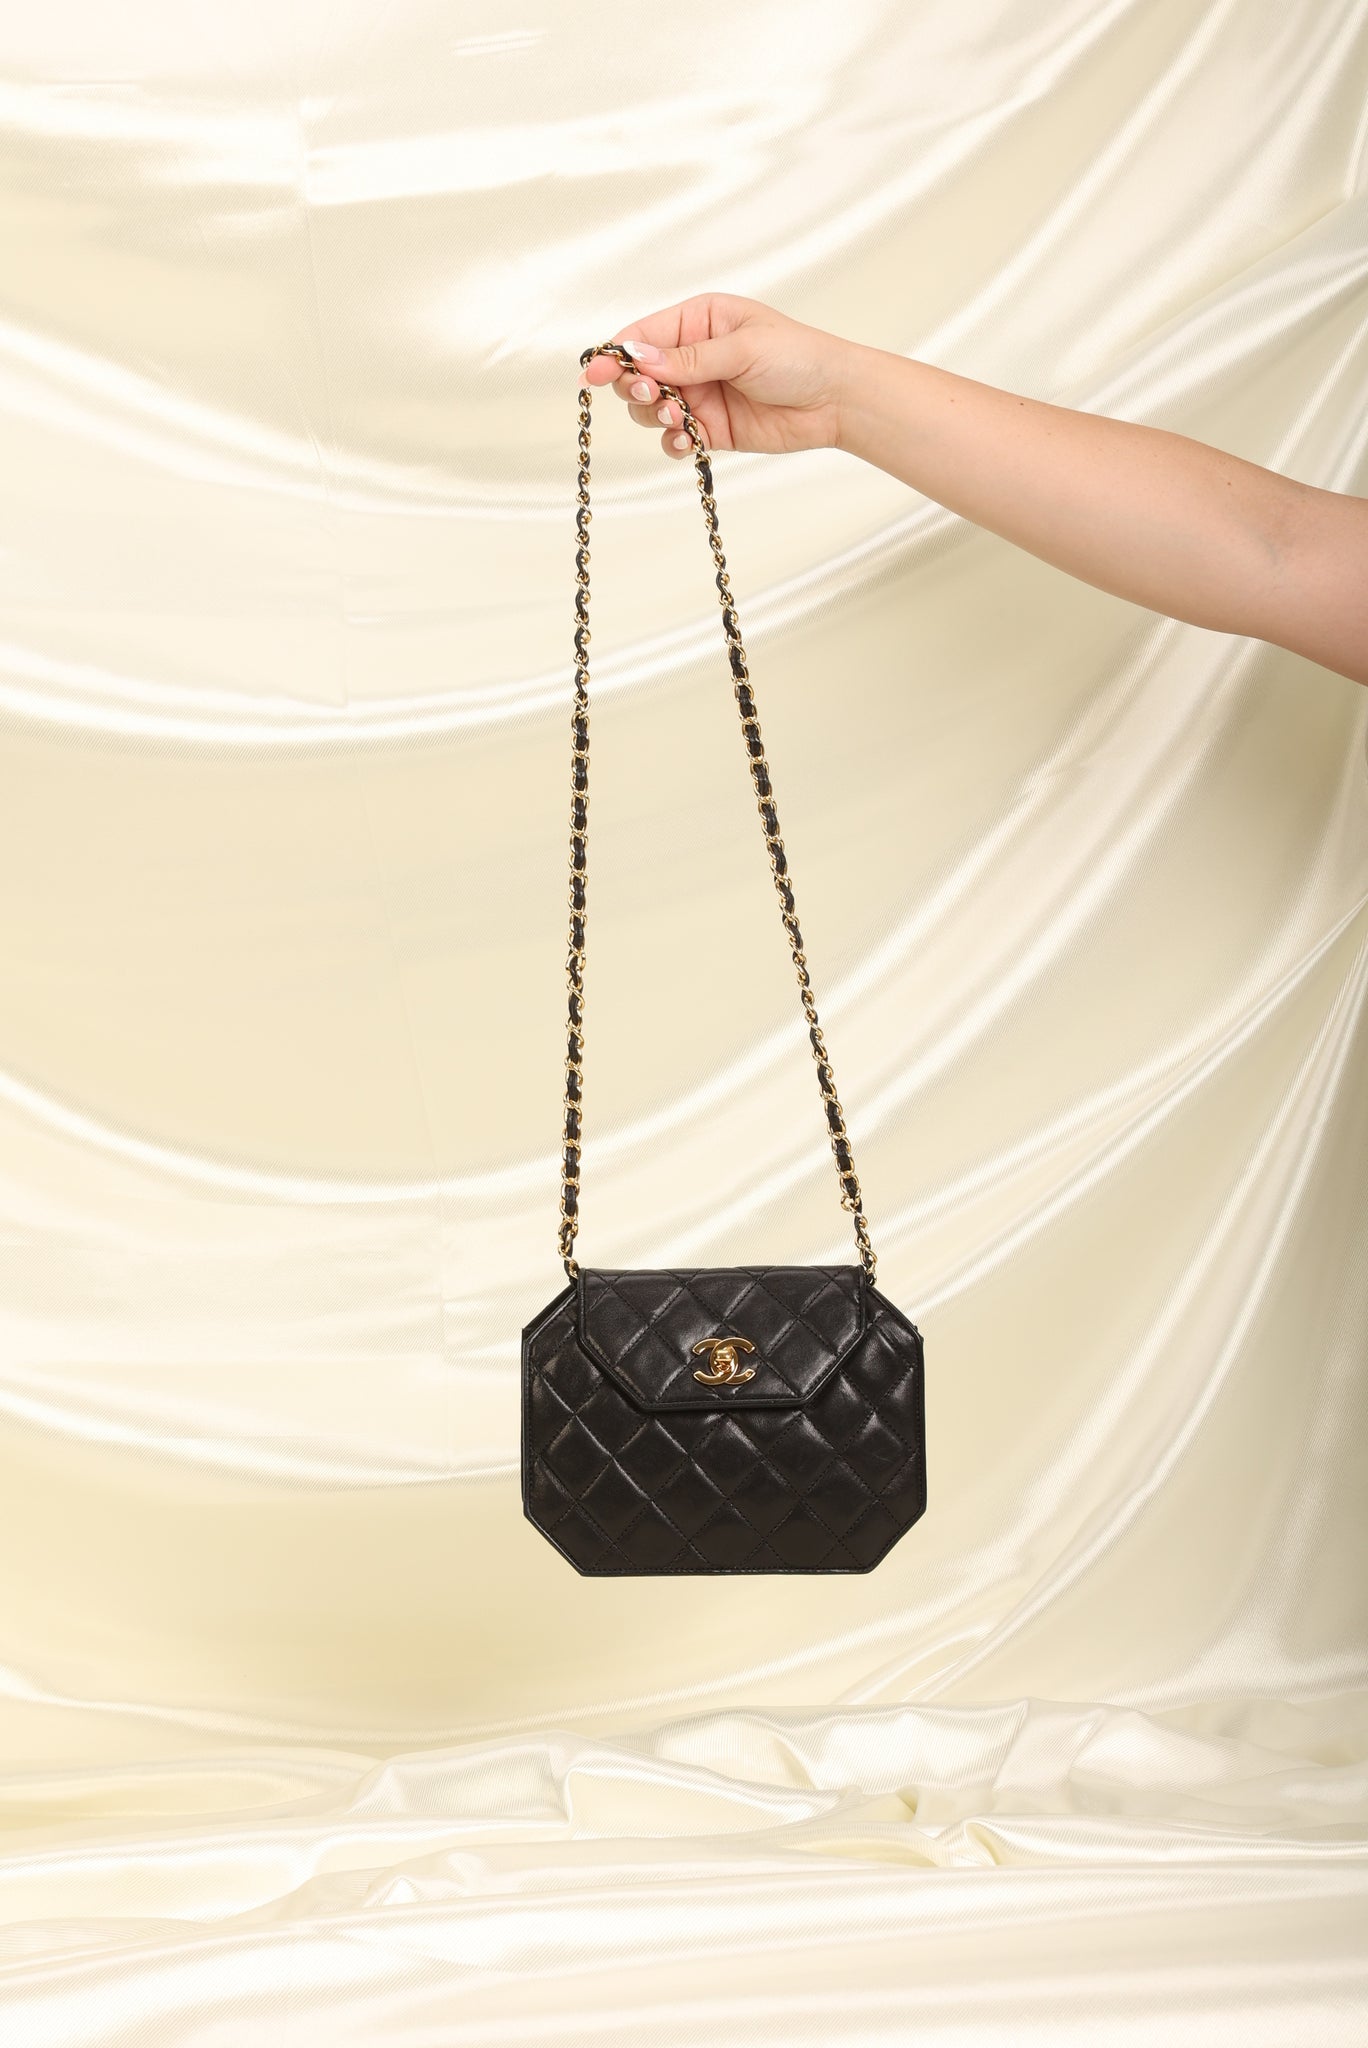 Ultra-Rare Chanel Lambskin Octagon Shoulder Bag